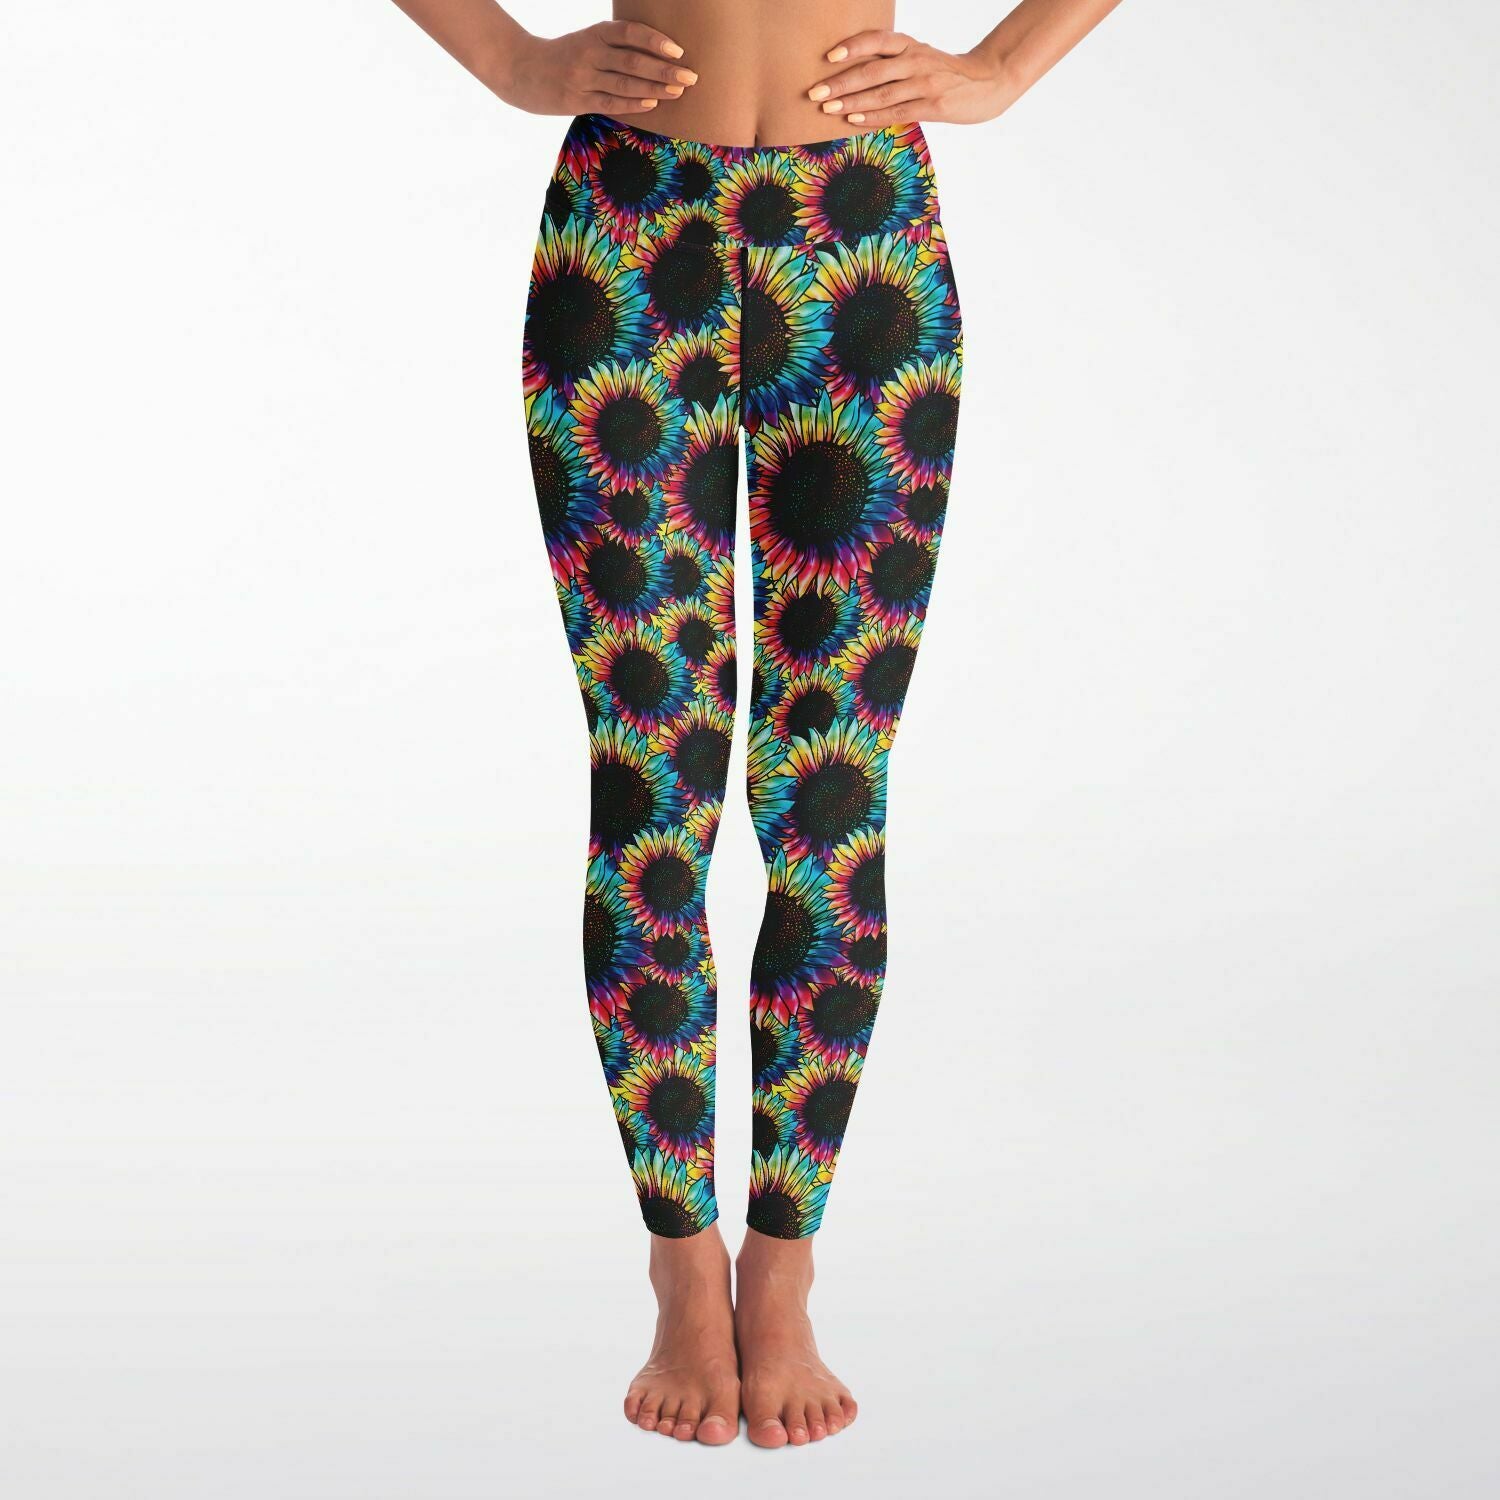 Women's Trippy Tie-Dye Electric Rave Rainbow Sunflowers High-waisted Yoga Leggings